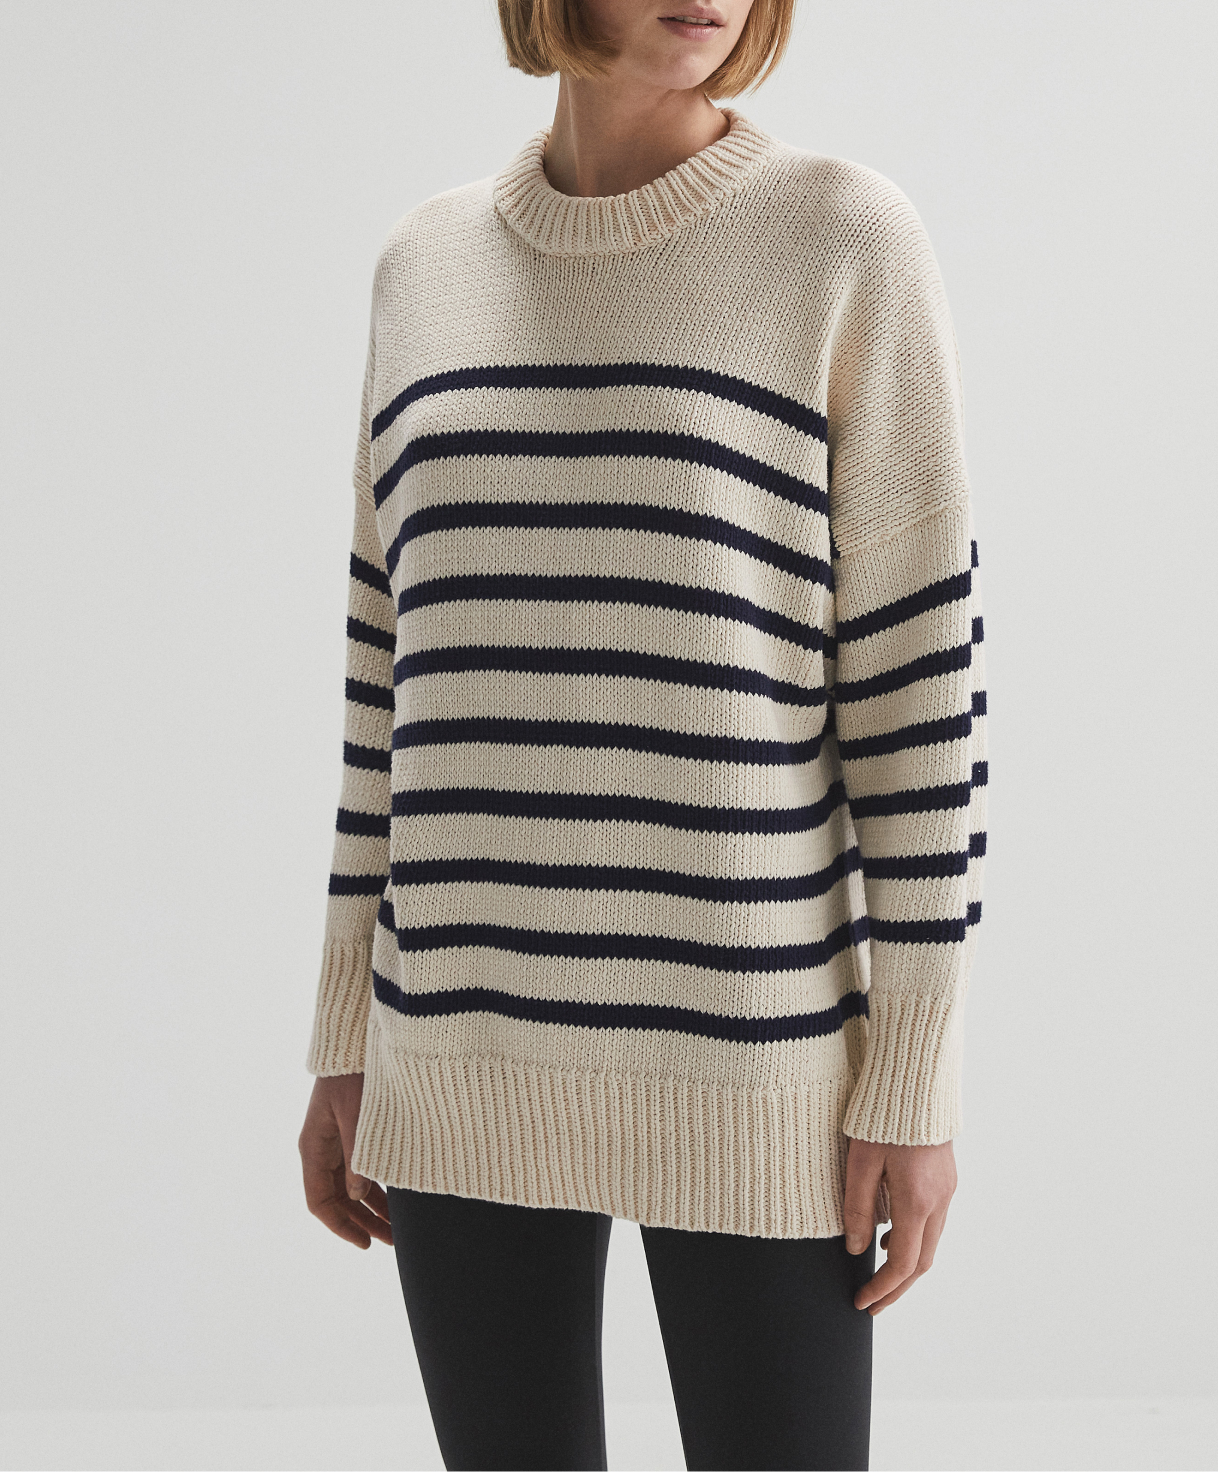 Striped oversize 100% cotton knit jumper